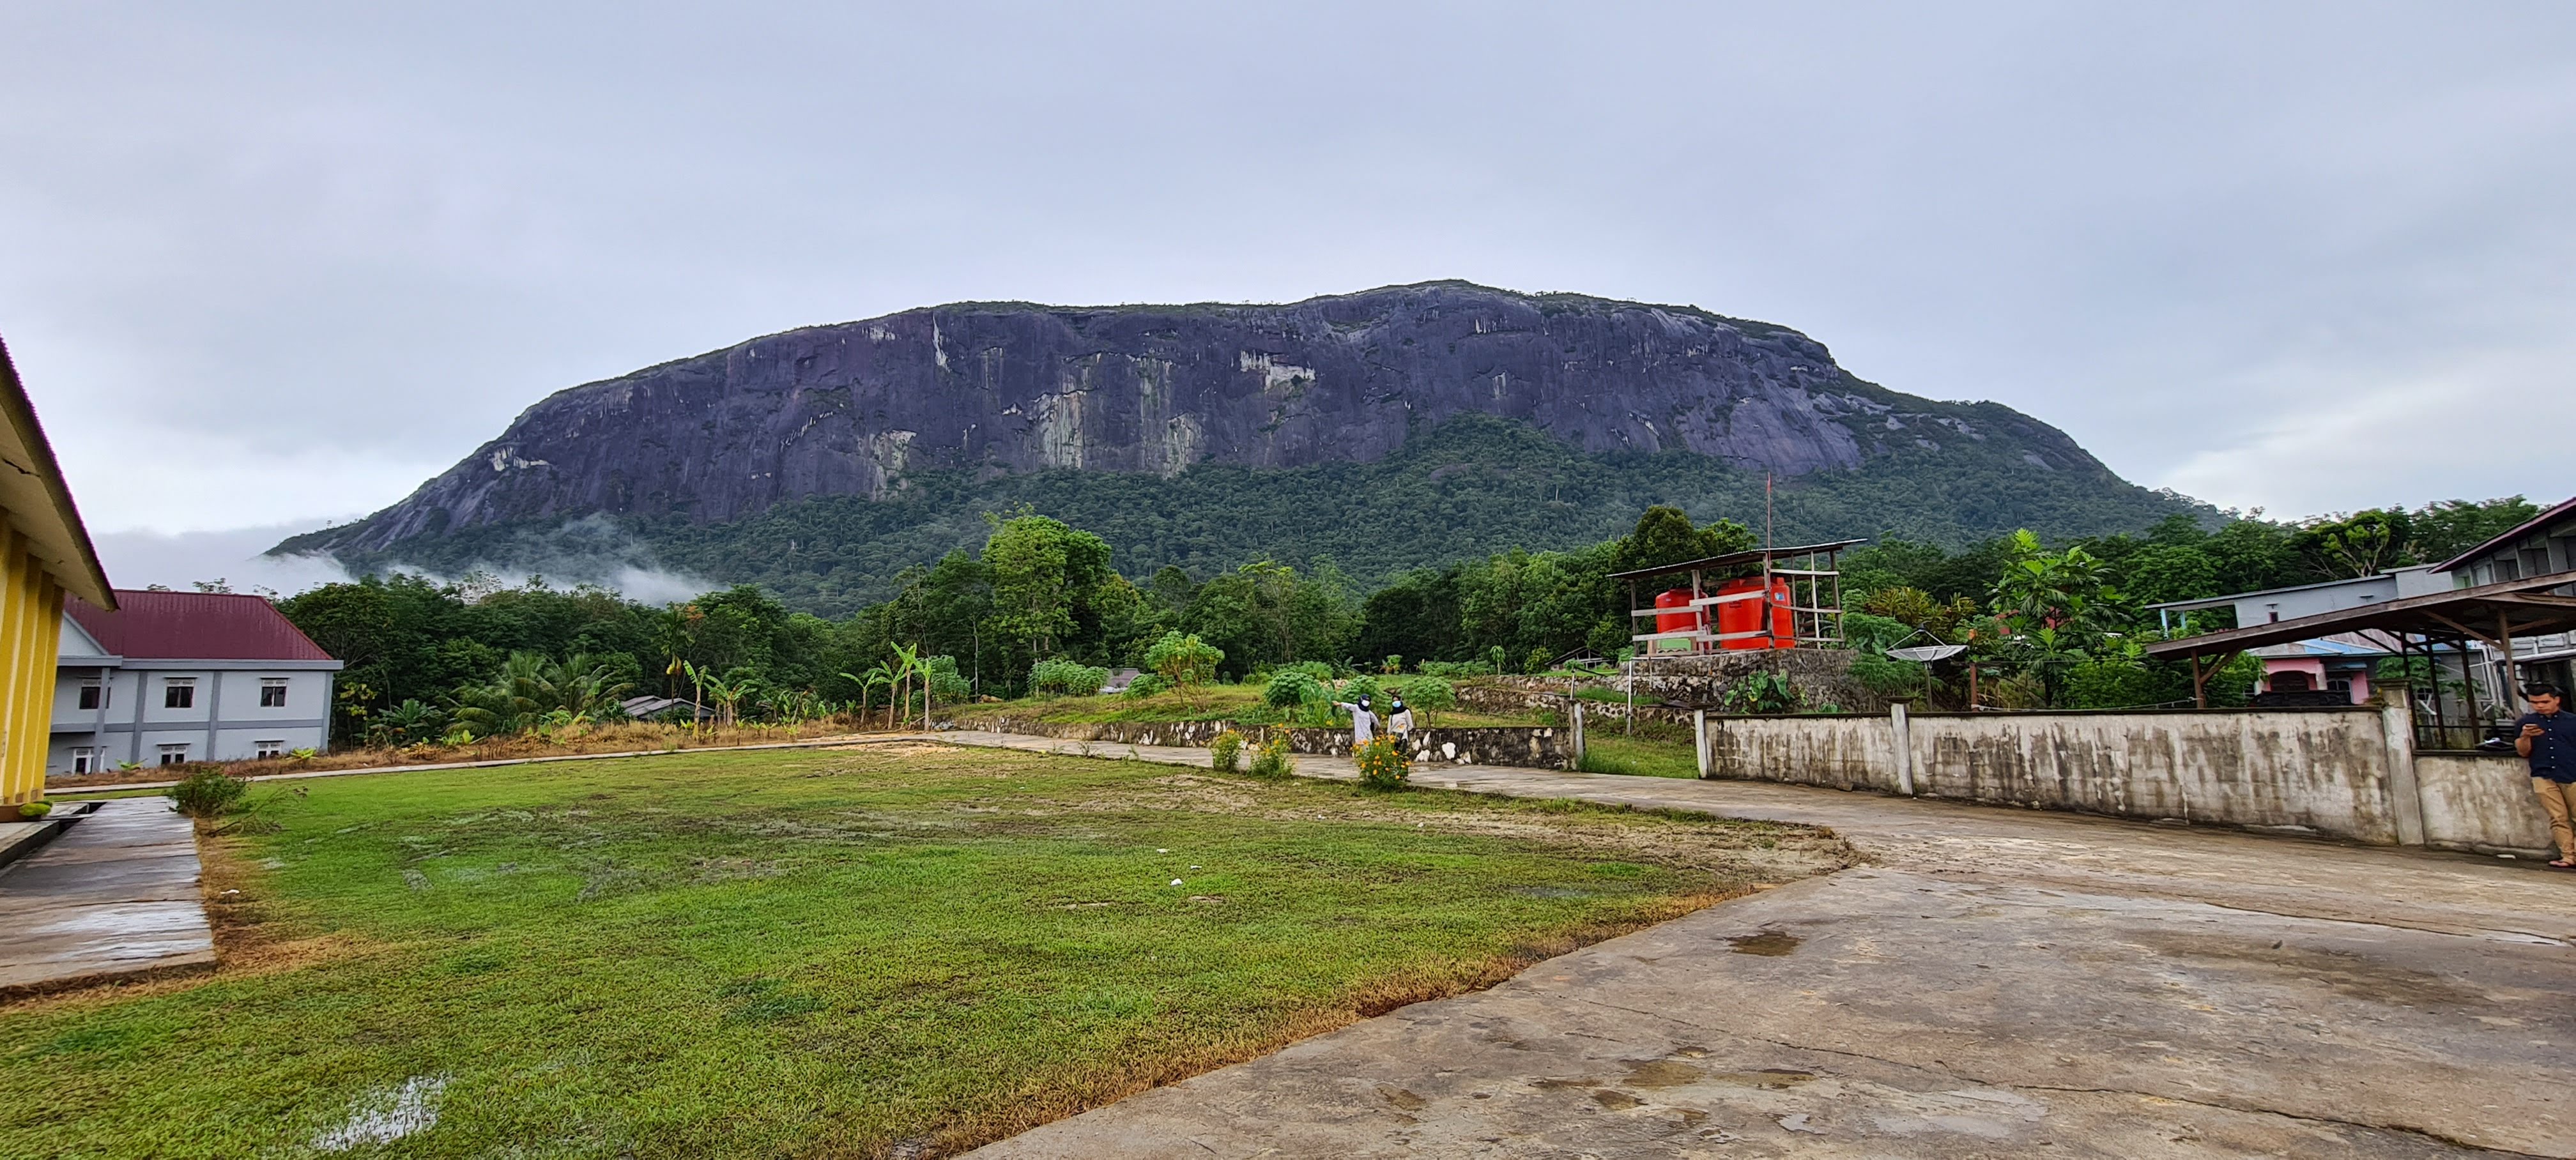 Bukit Kelam di Sintang: Batu Monolit Terbesar di Dunia dengan Segala Keunikannya